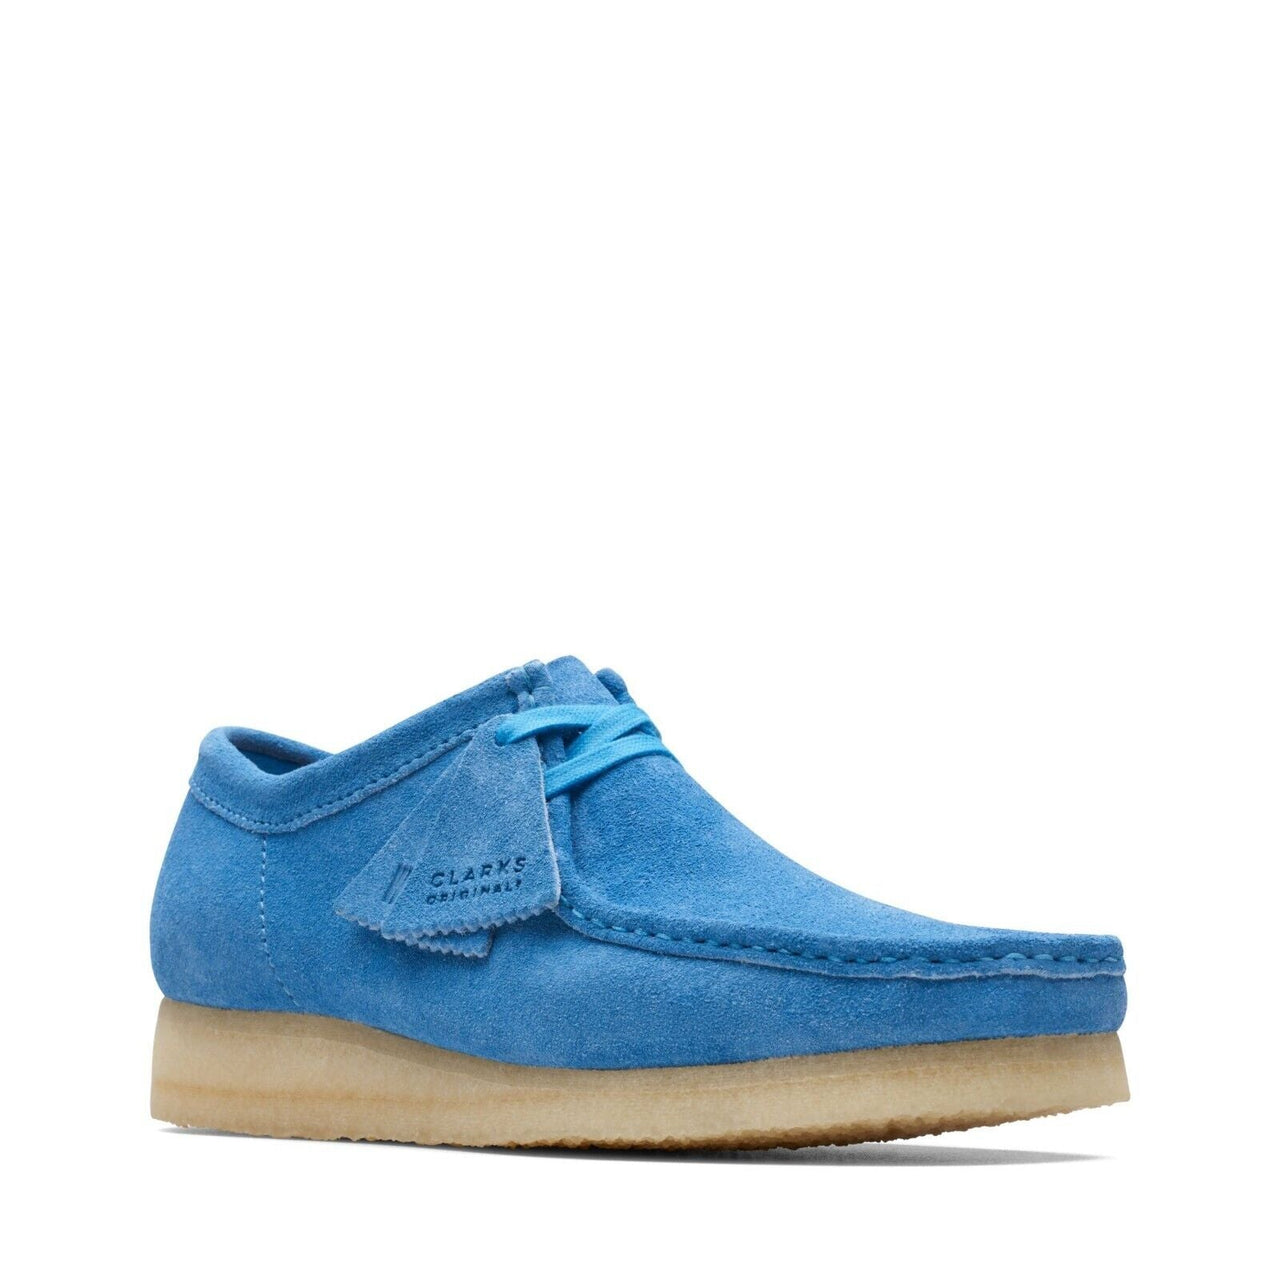 Clarks Originals Wallabee Low Men's Bright Blue Suede 26170534 shoes on display